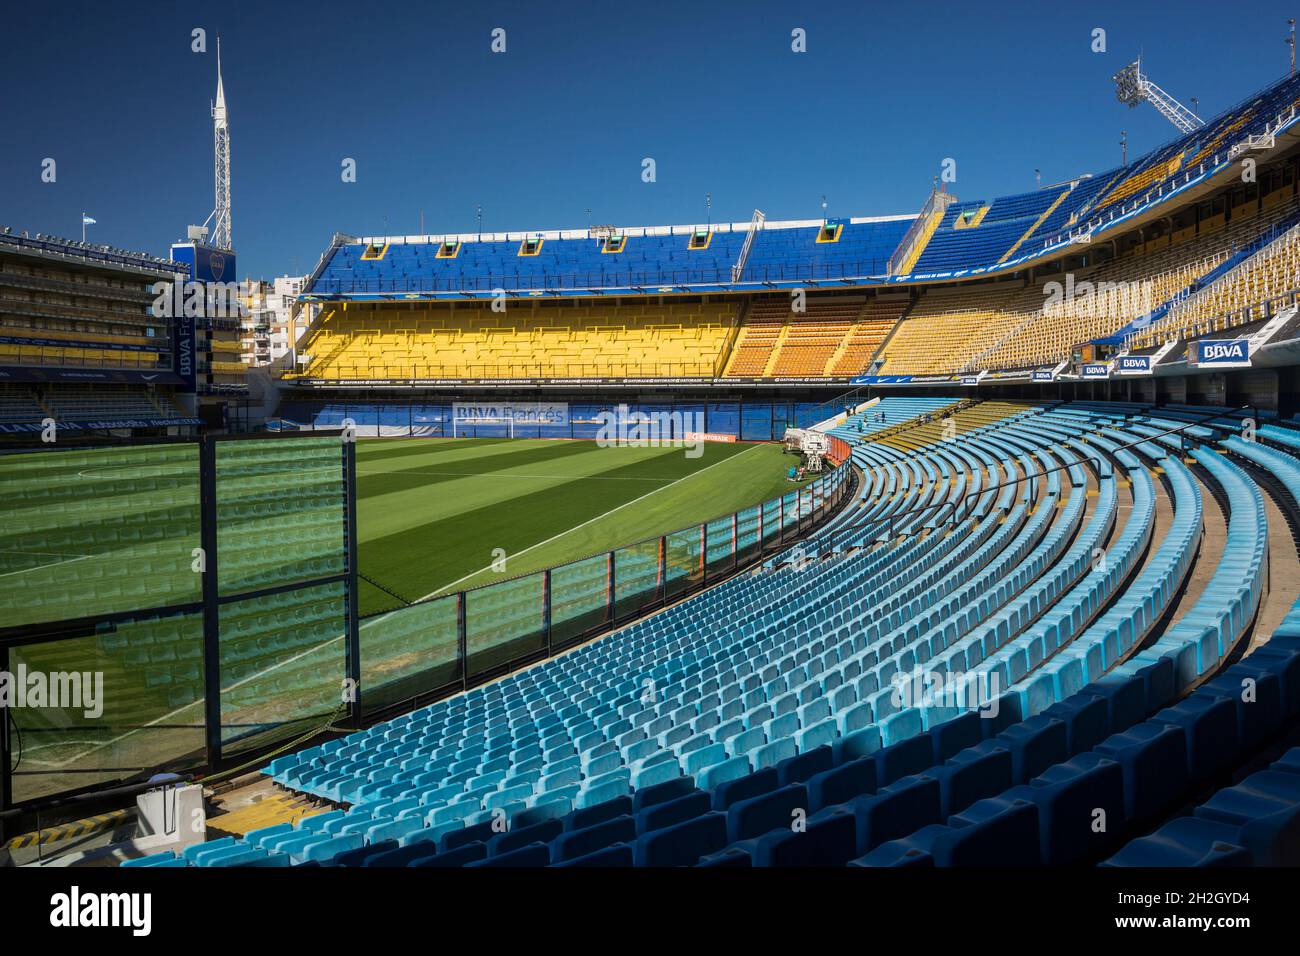 Horizontal lateral view of La Bombonera (Boca Juniors soccer field) stands and field, La Boca neighborhood, Buenos Aires, Argentina Stock Photo